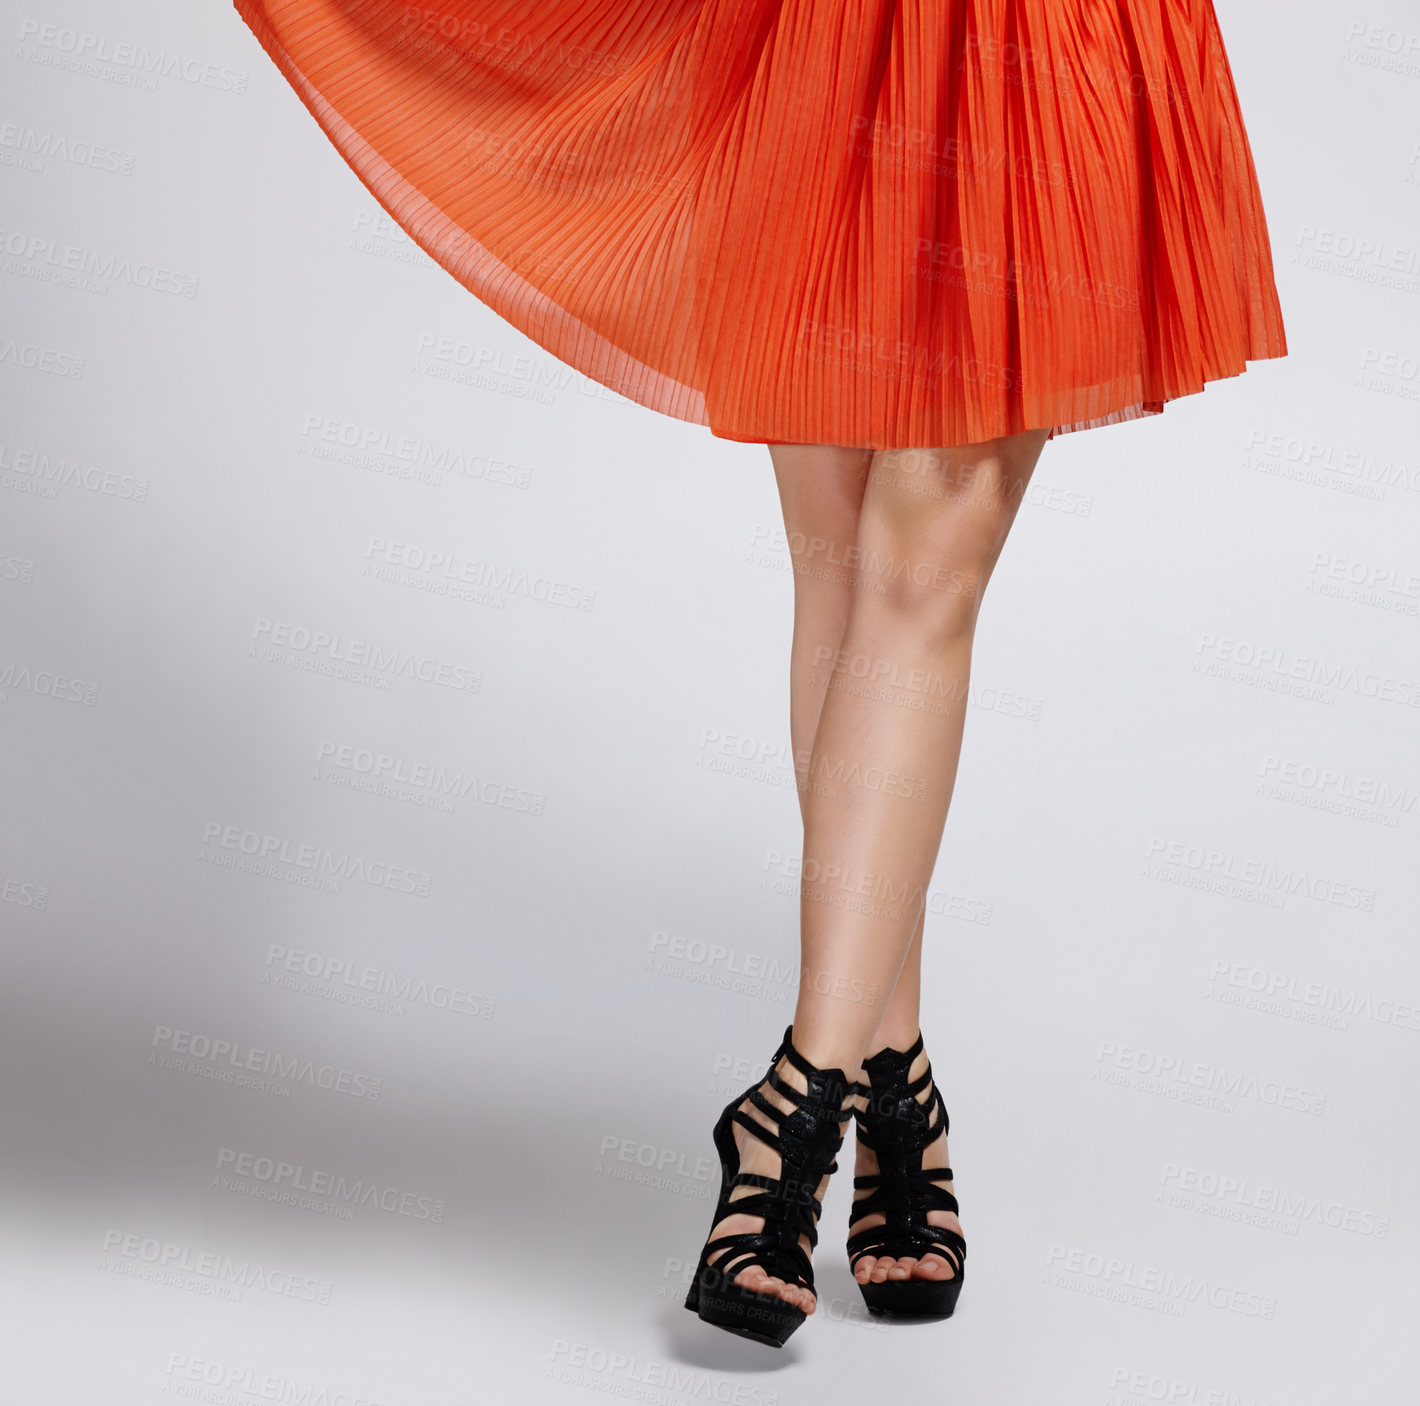 Buy stock photo Waist down studio shot of a woman in an orange dress and high heels